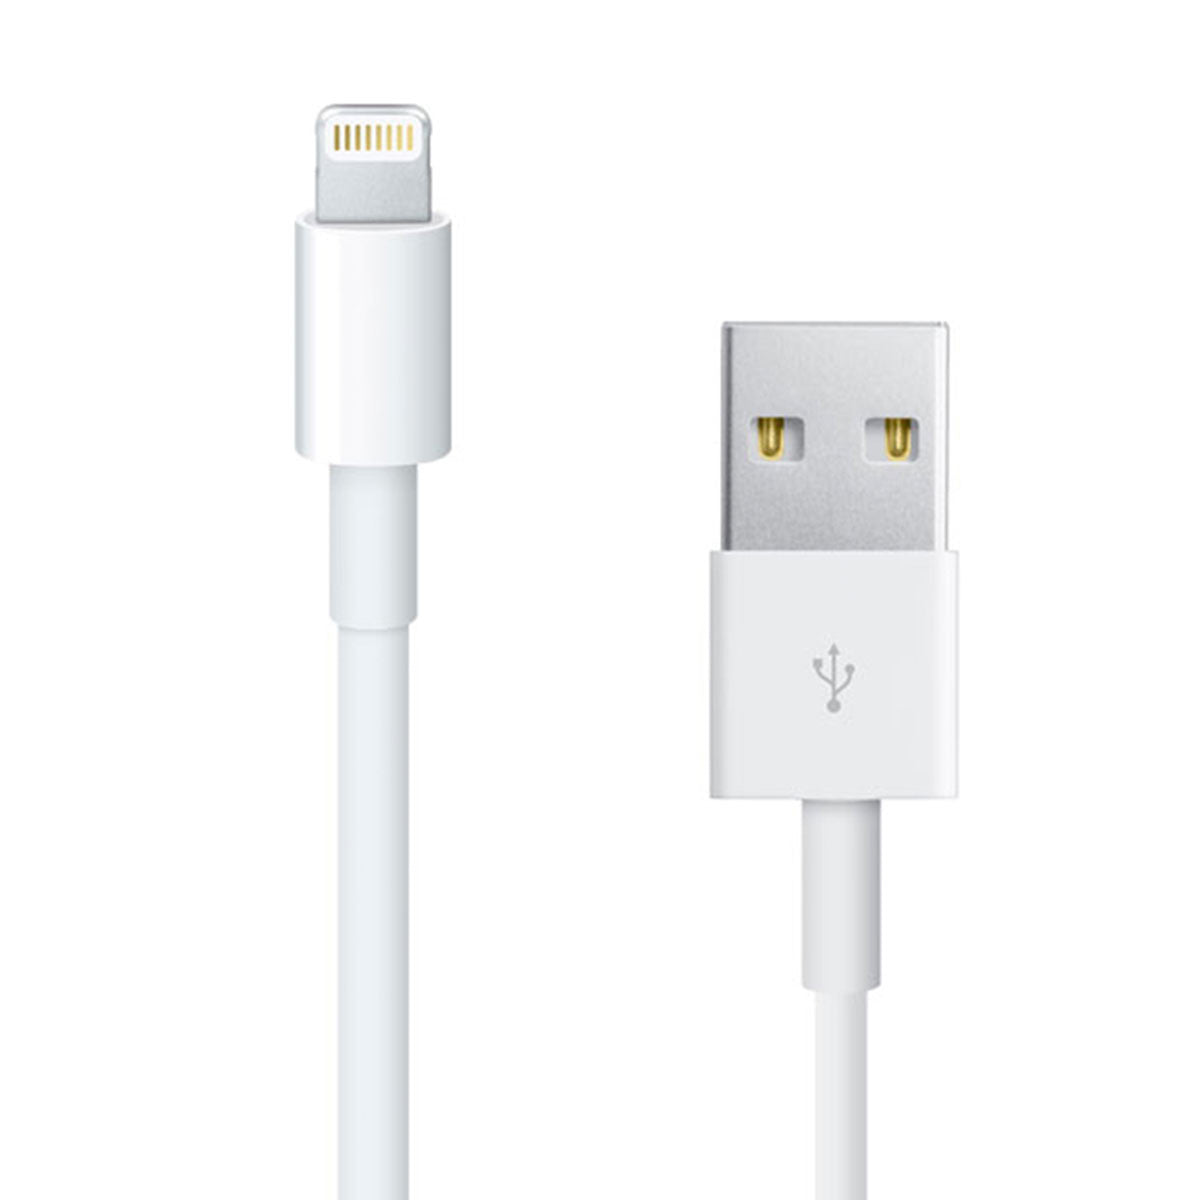 50cm 1m 2m Lightning Cable For Apple iPhone iPad Pro Mini Air iPod 50cm  